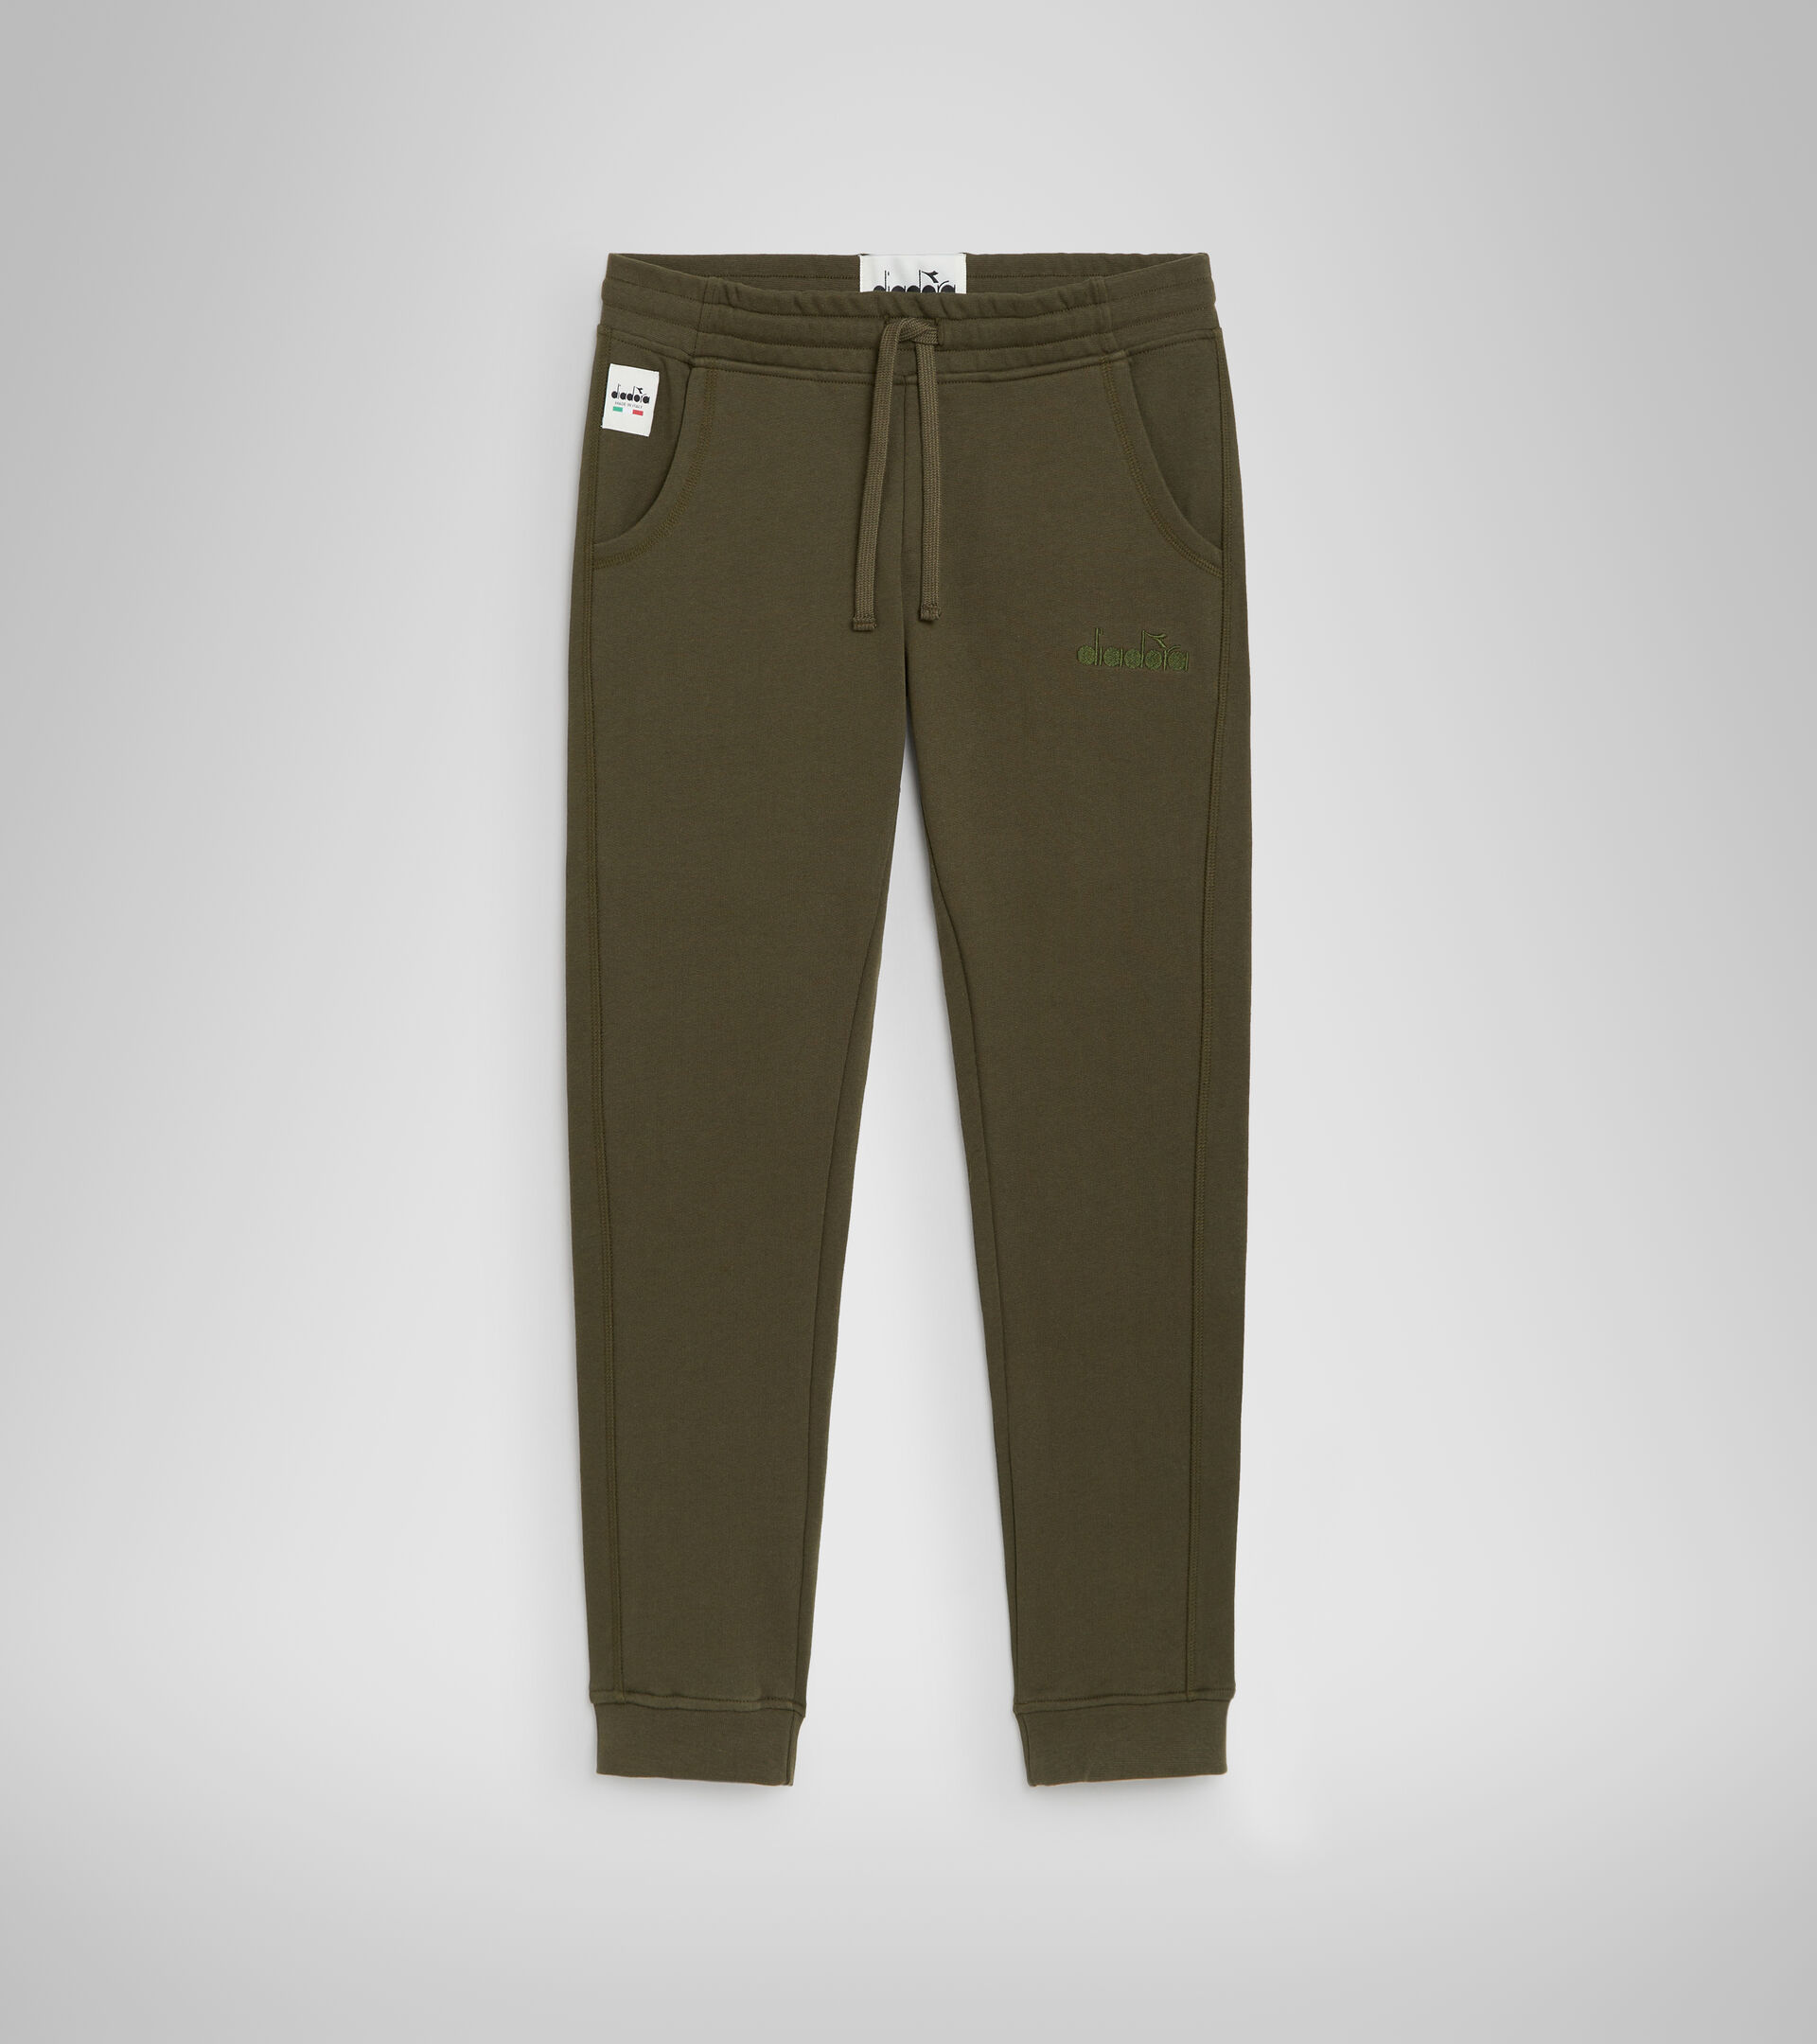 L. JOGGER PANT MII Pantalón deportivo de algodón - Mujer - Tienda en línea  Diadora PE